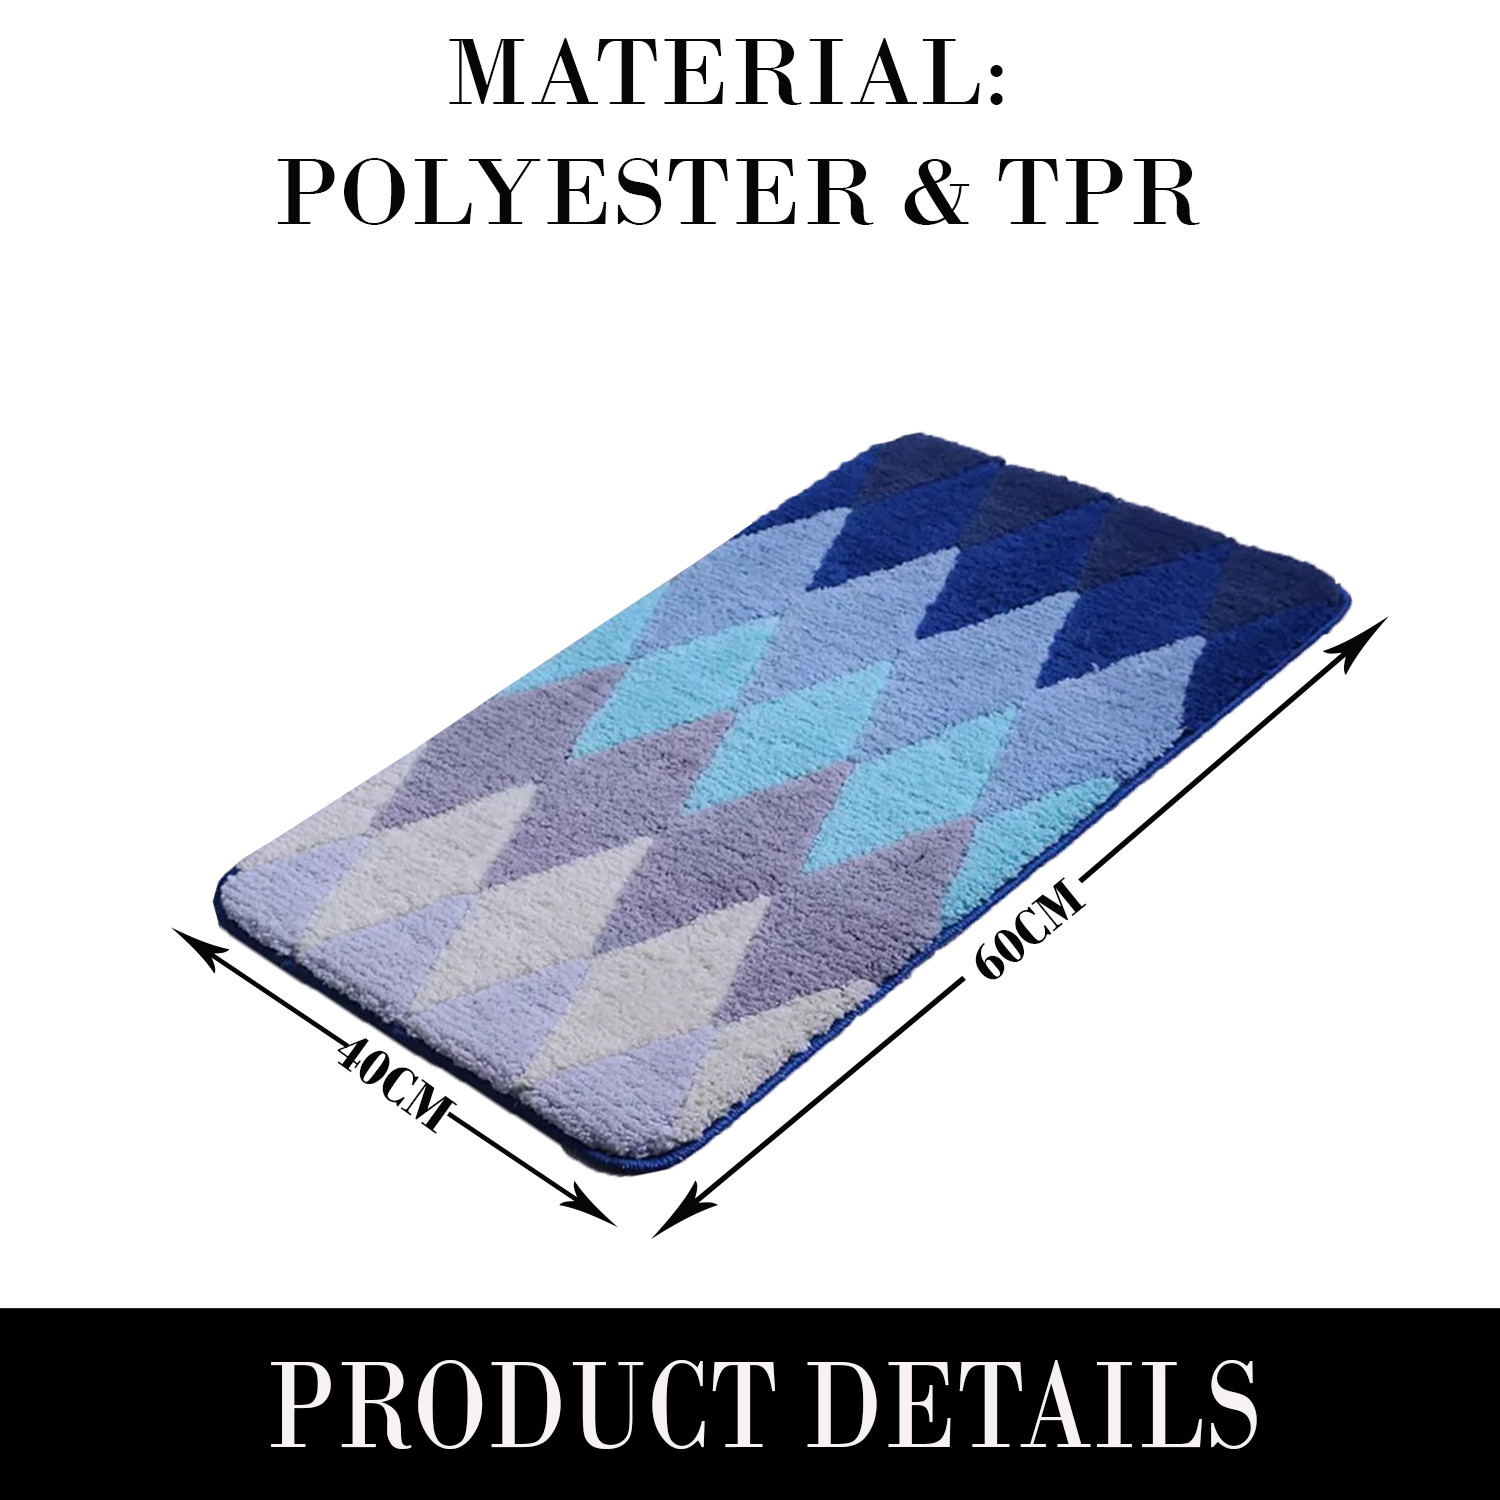 Kuber Industries Diamond Design Bathroom Mat|Anti-Slip Mat For Bathroom Floor|Extra Soft With TPR Backing|Foot Mats For Home, Living Room, Bedroom (Blue)